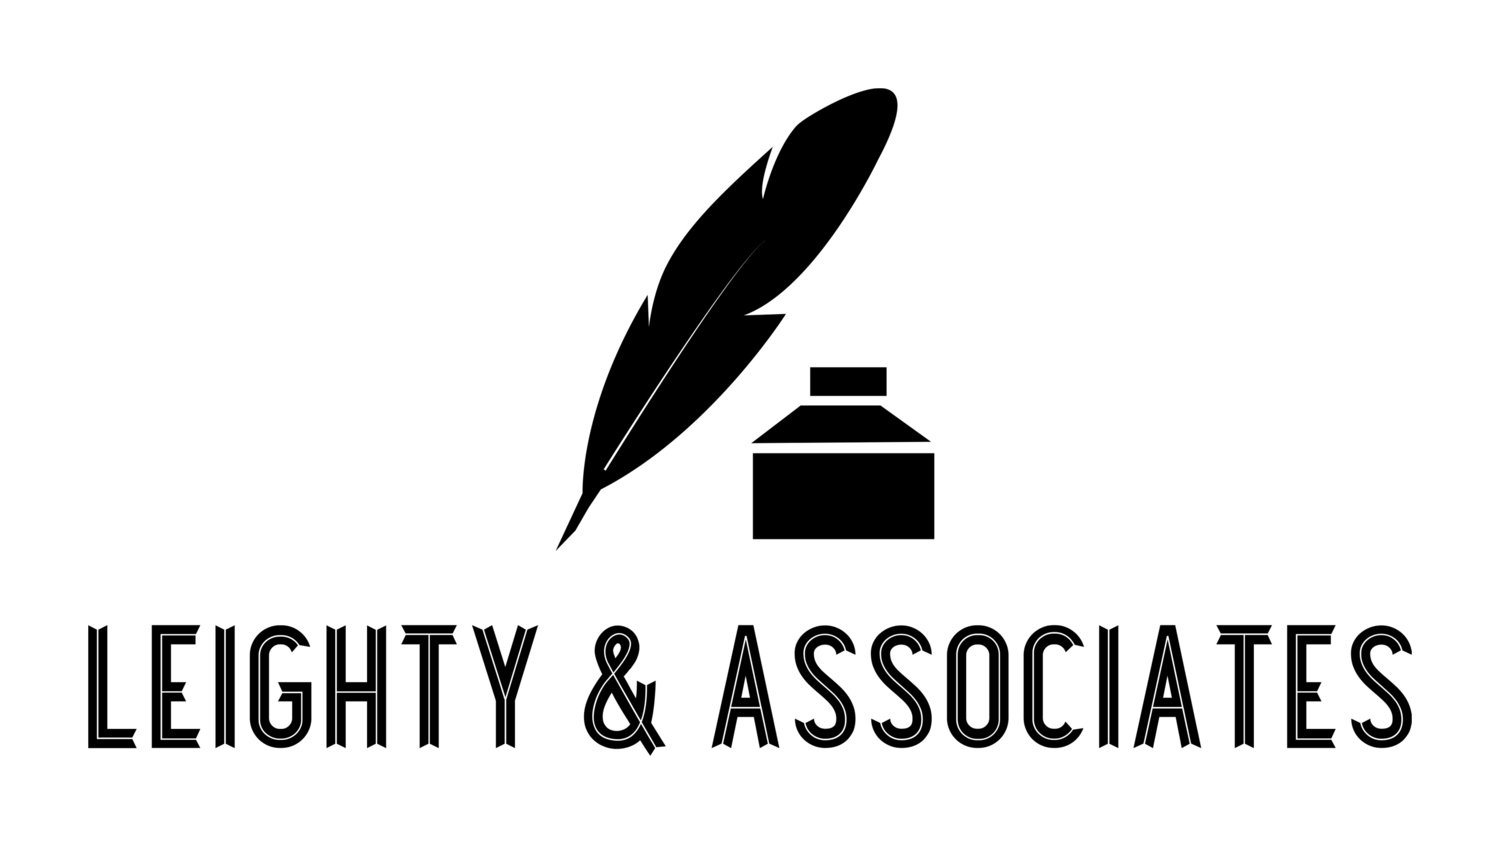 Leighty & Associates